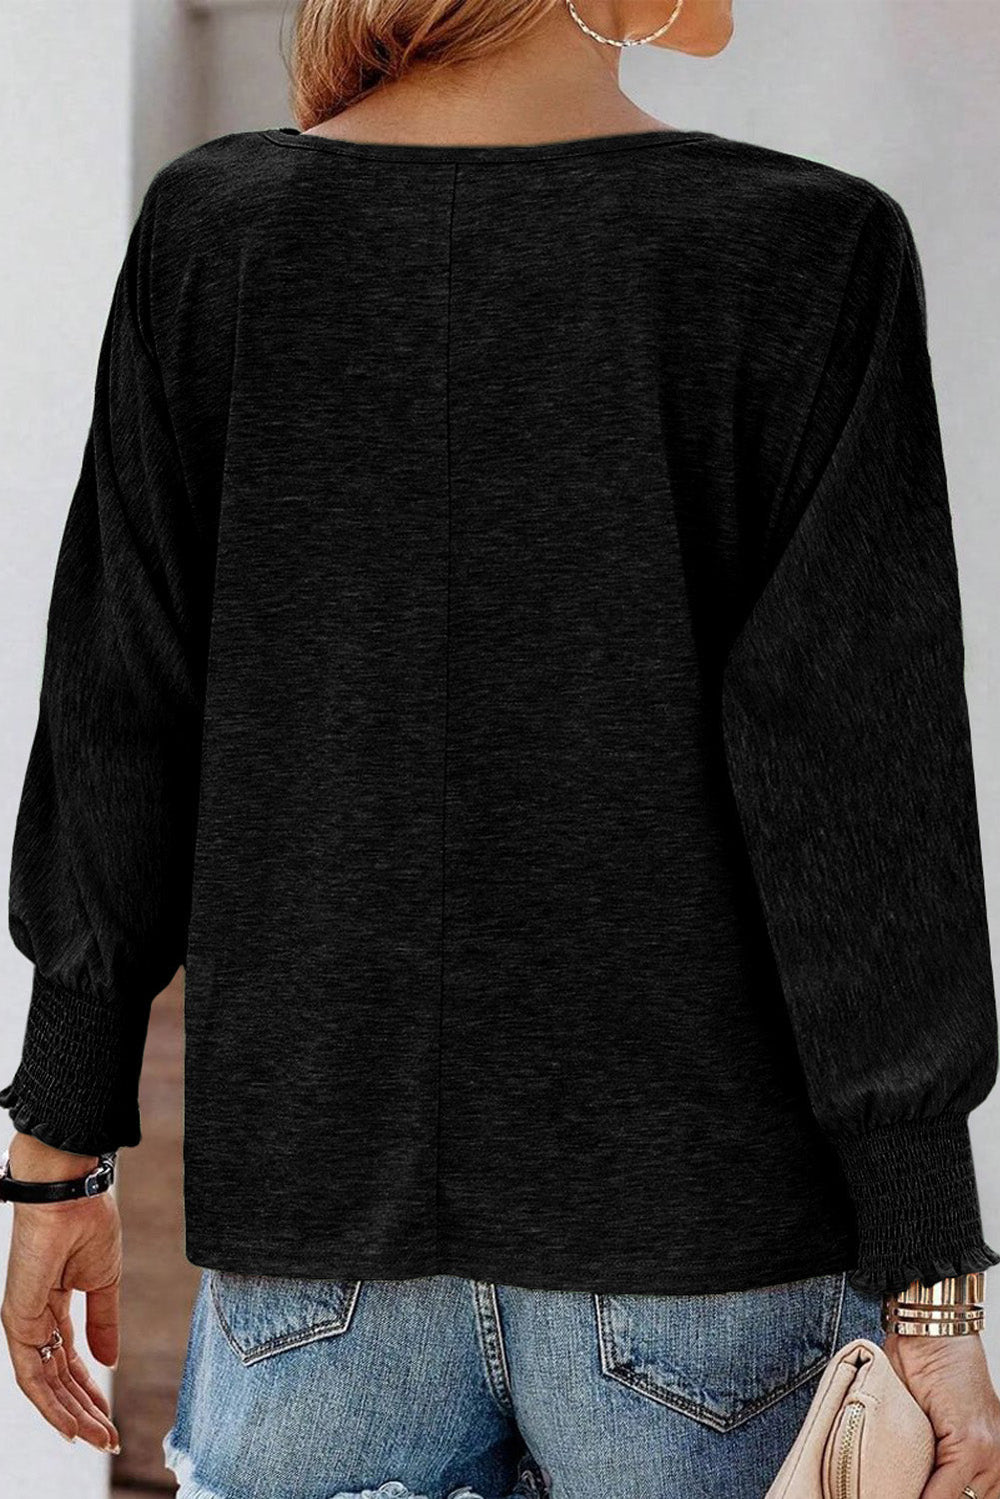 Black Marble Print Dolman Sleeve Top - Sizes S-XL Ti Amo I love you